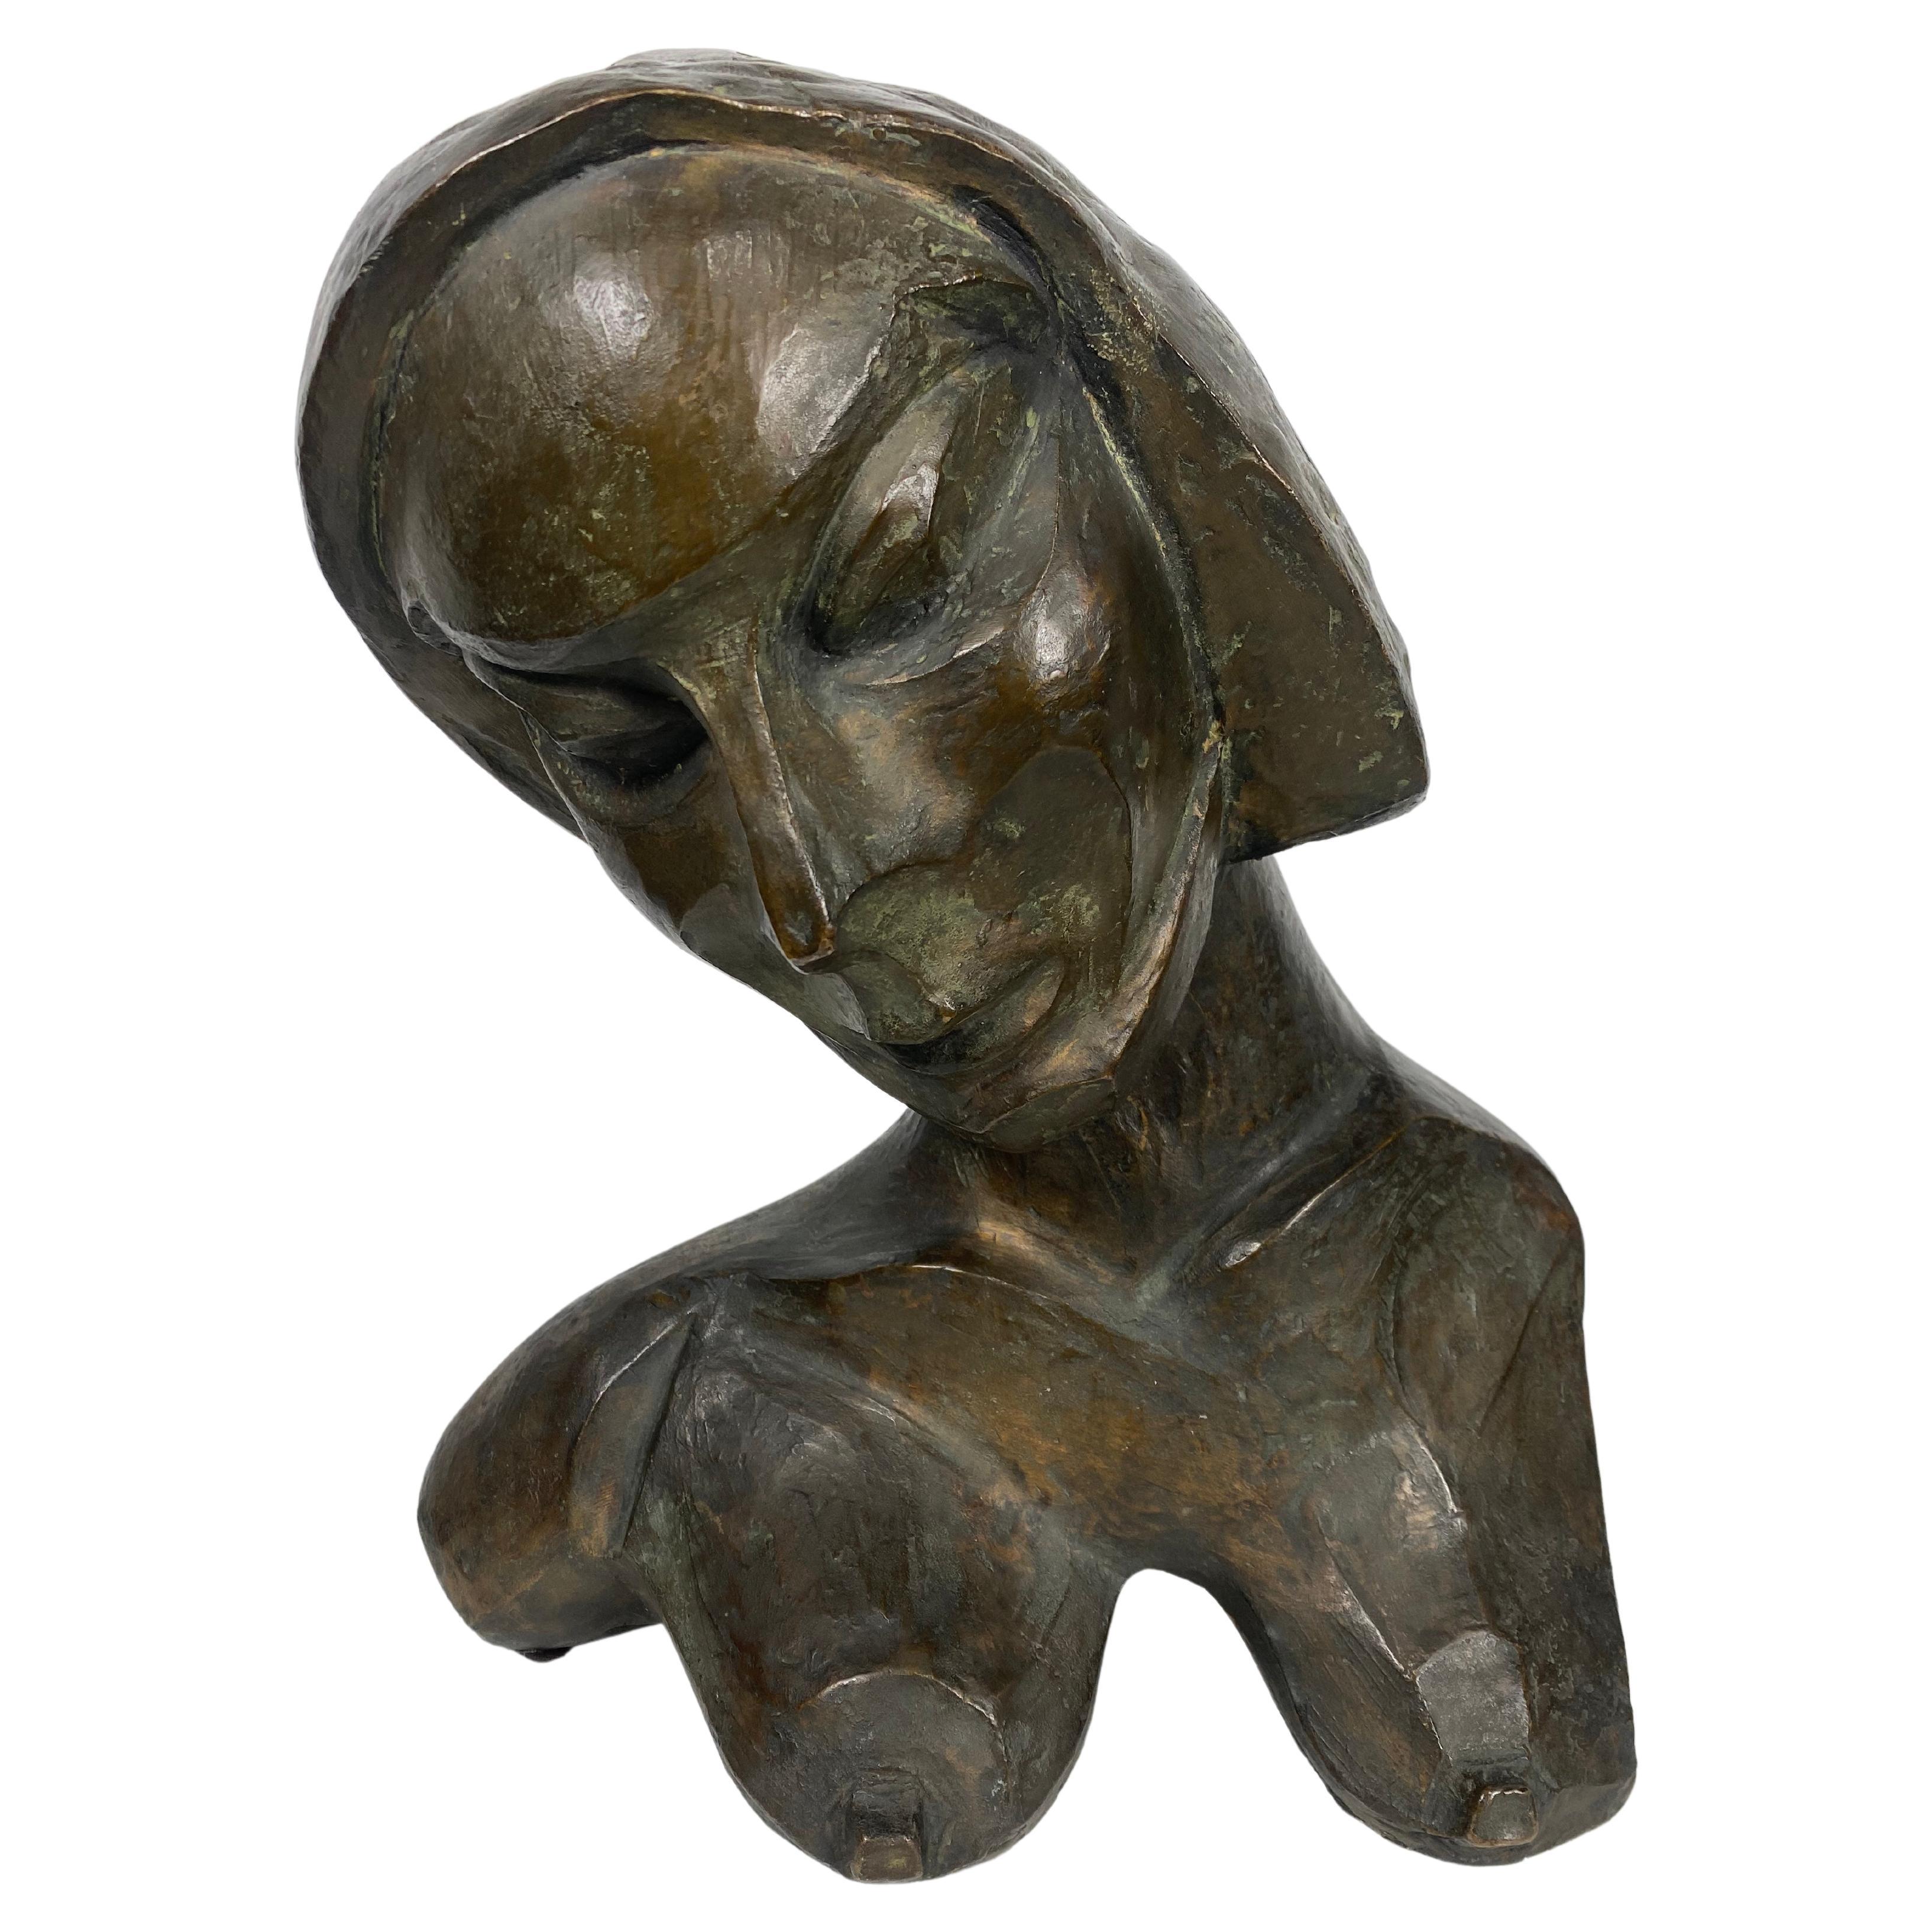 Stylized Art Deco, , W P A Bronze, , Woman bust, signed